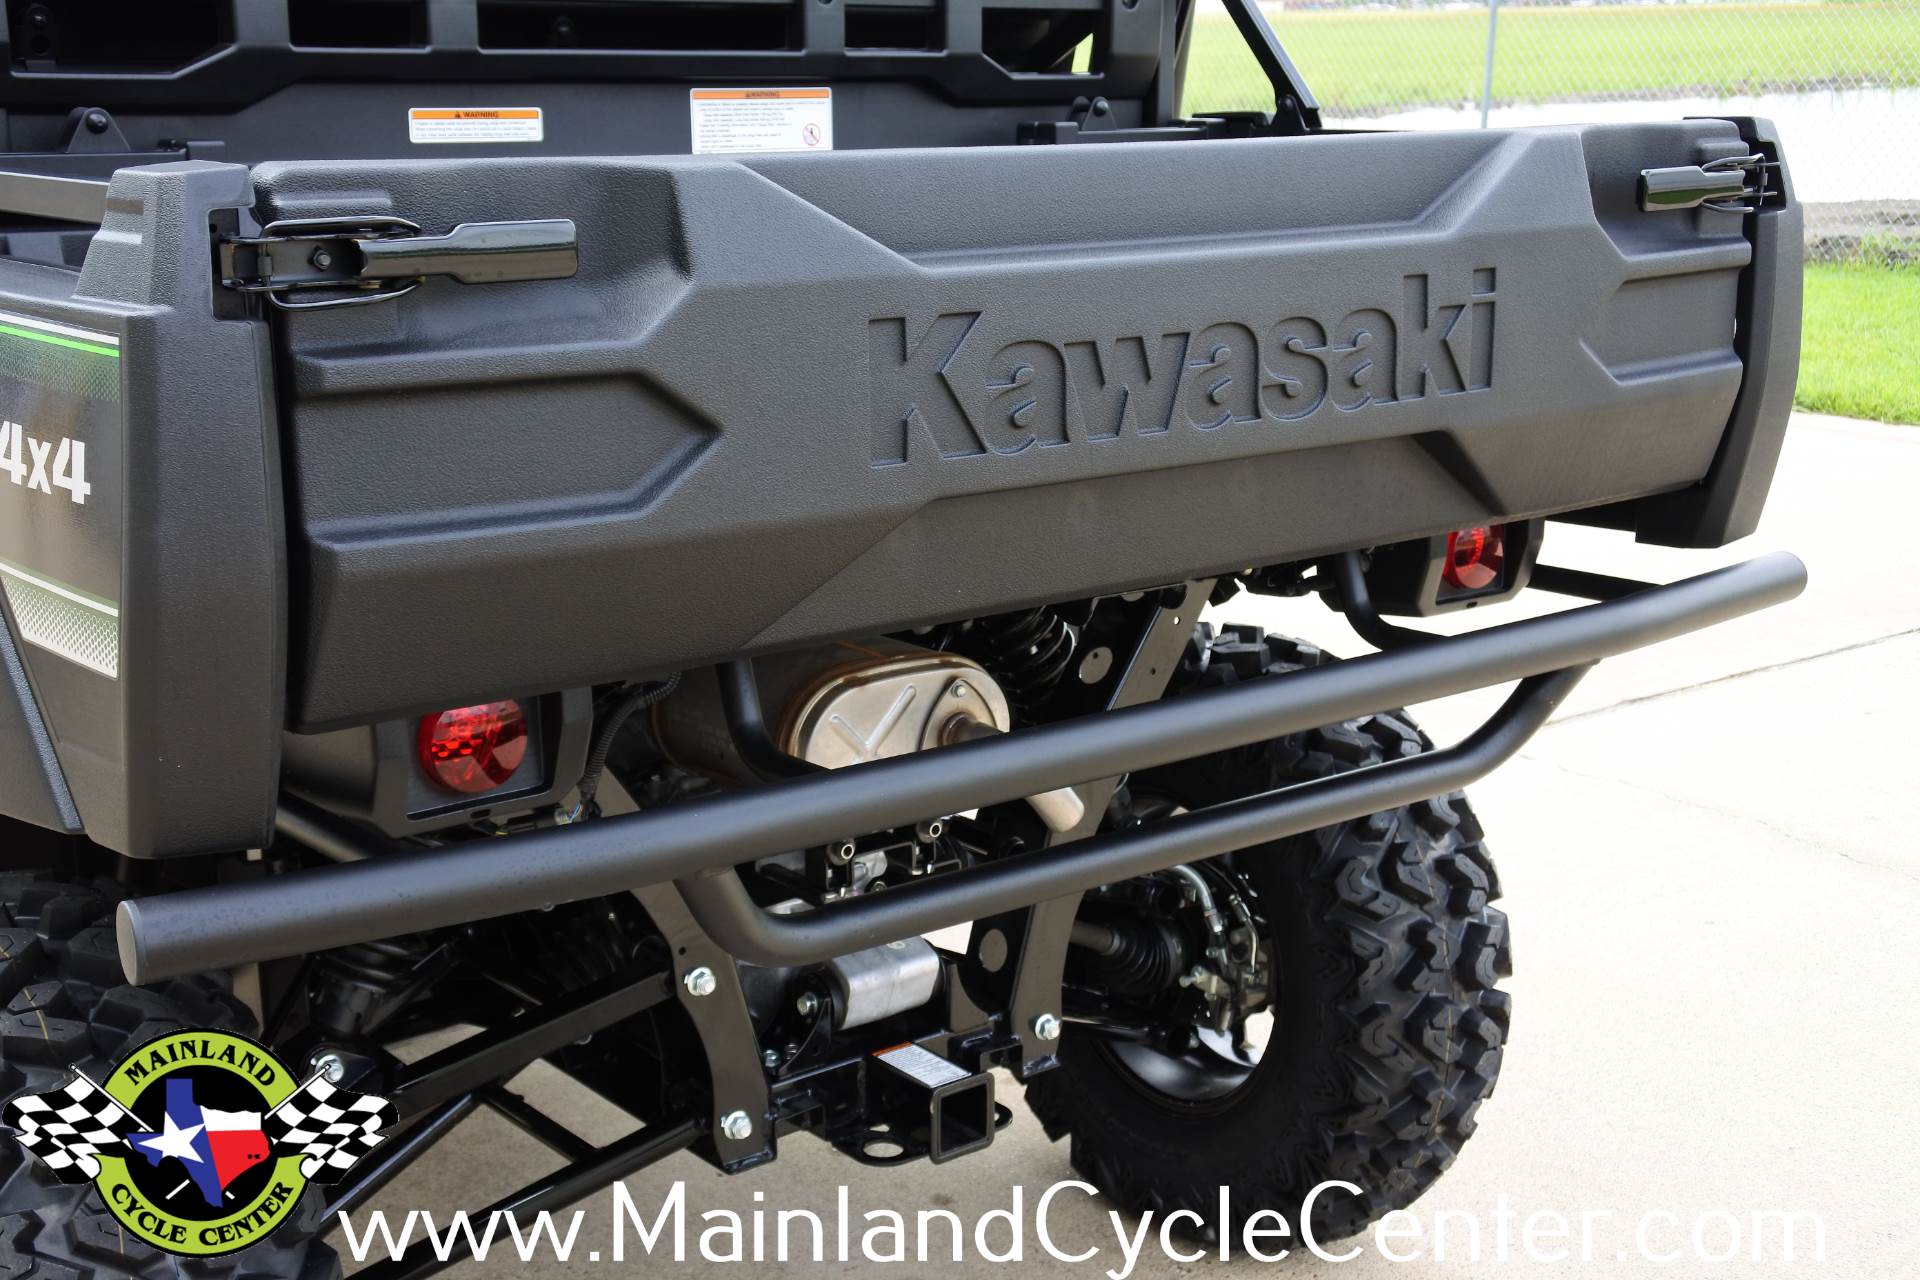 2017 Kawasaki Mule PRO-FXT EPS LE in La Marque, Texas - Photo 17